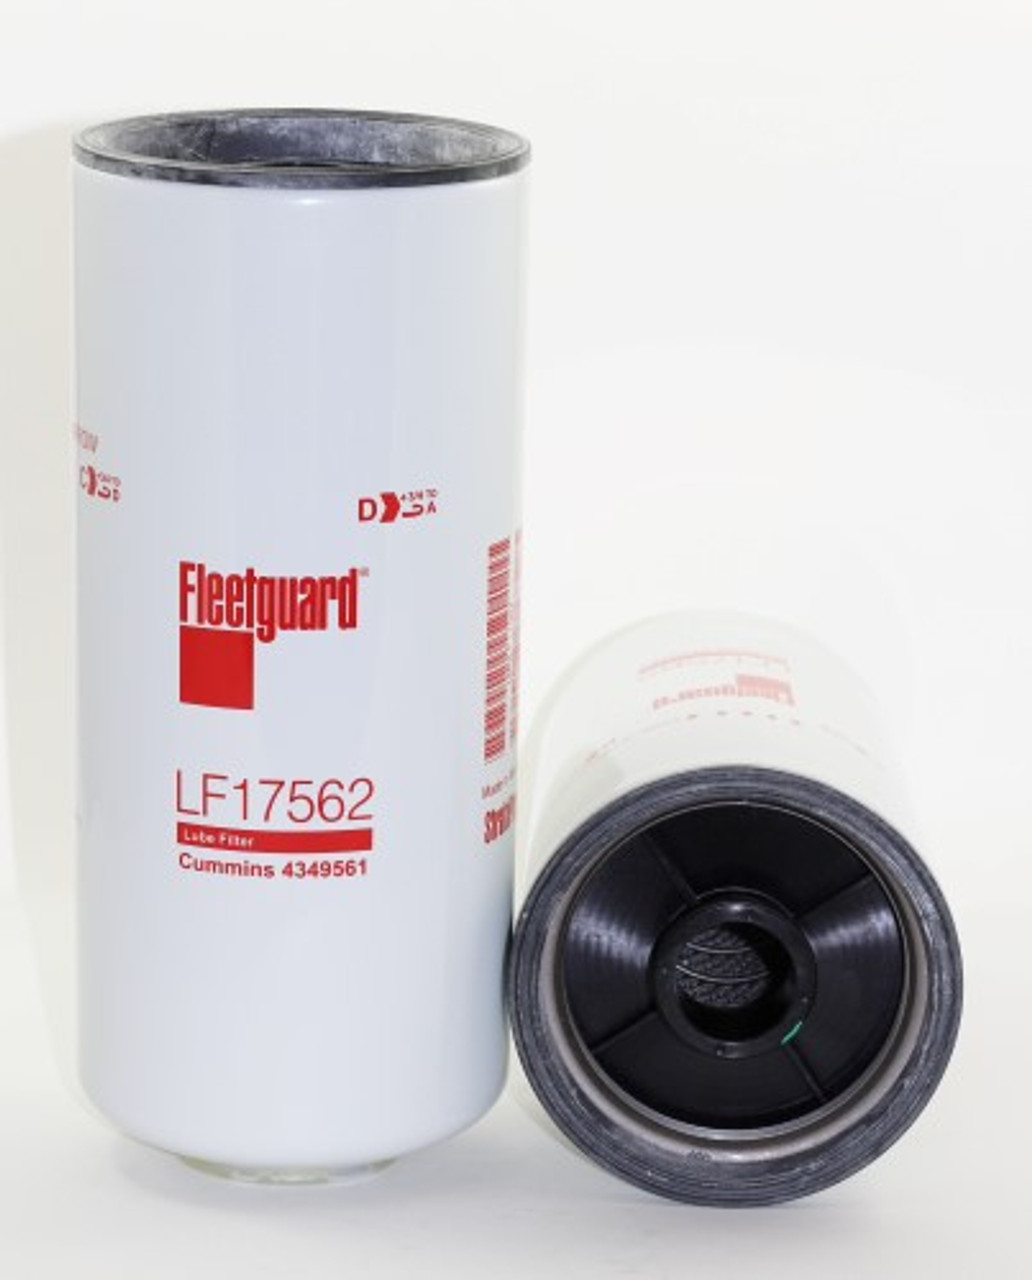 LF17562: Fleetguard Oil Filter